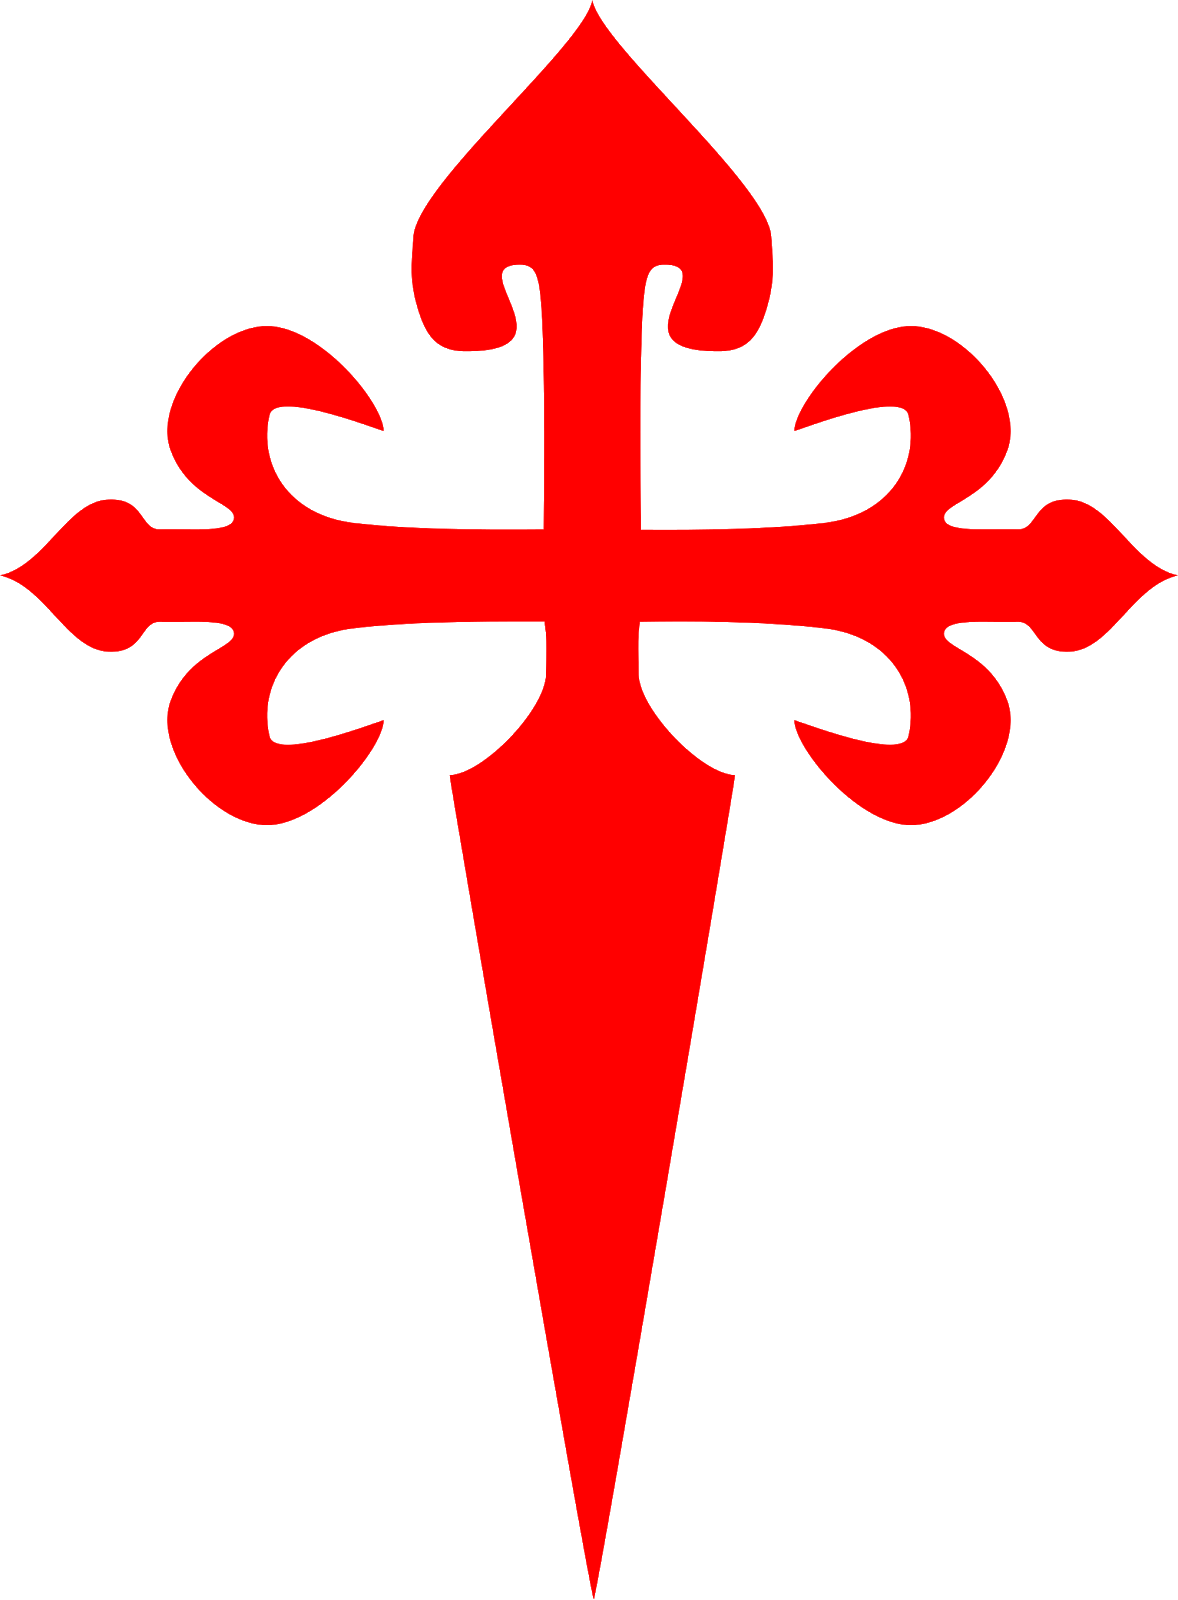 Cross of St. James